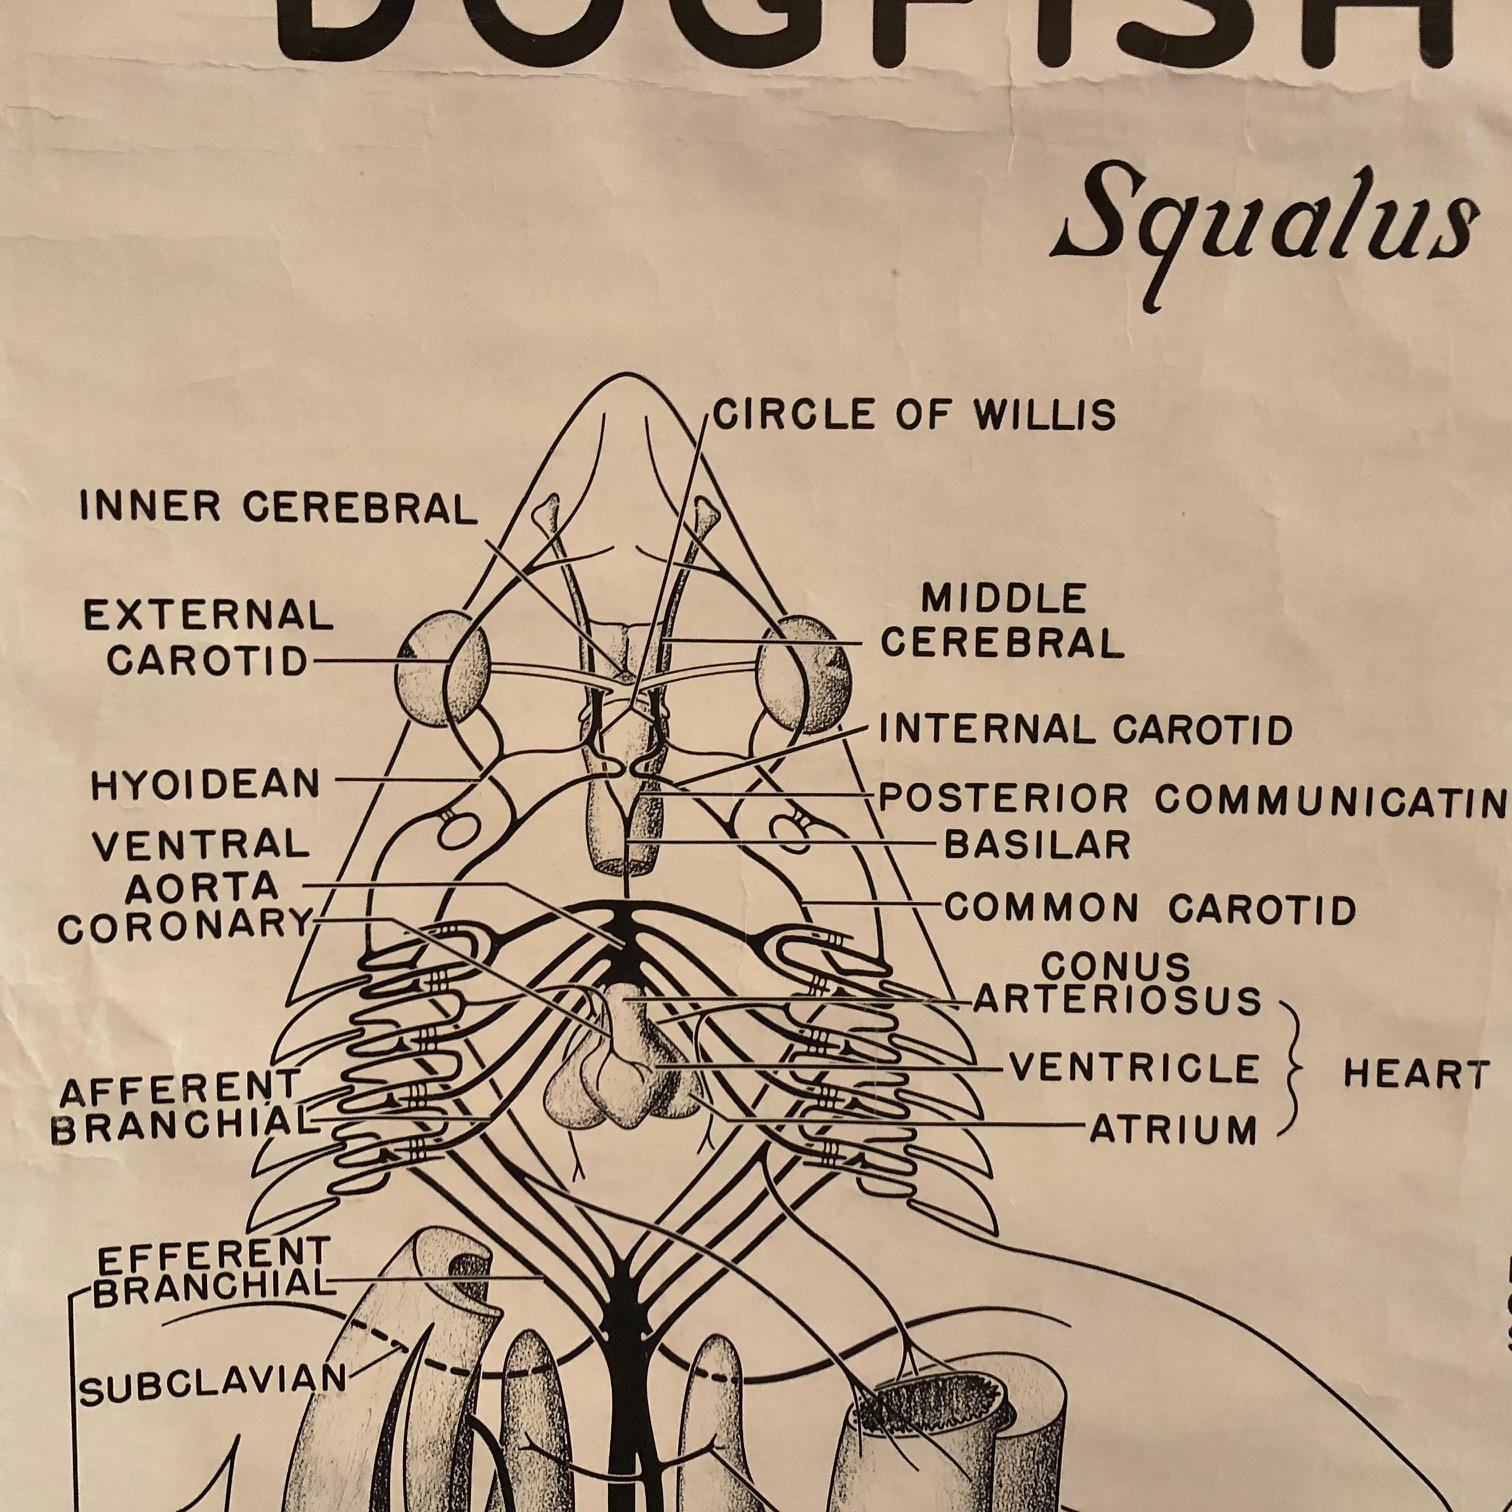 dogfish anatomy labeled